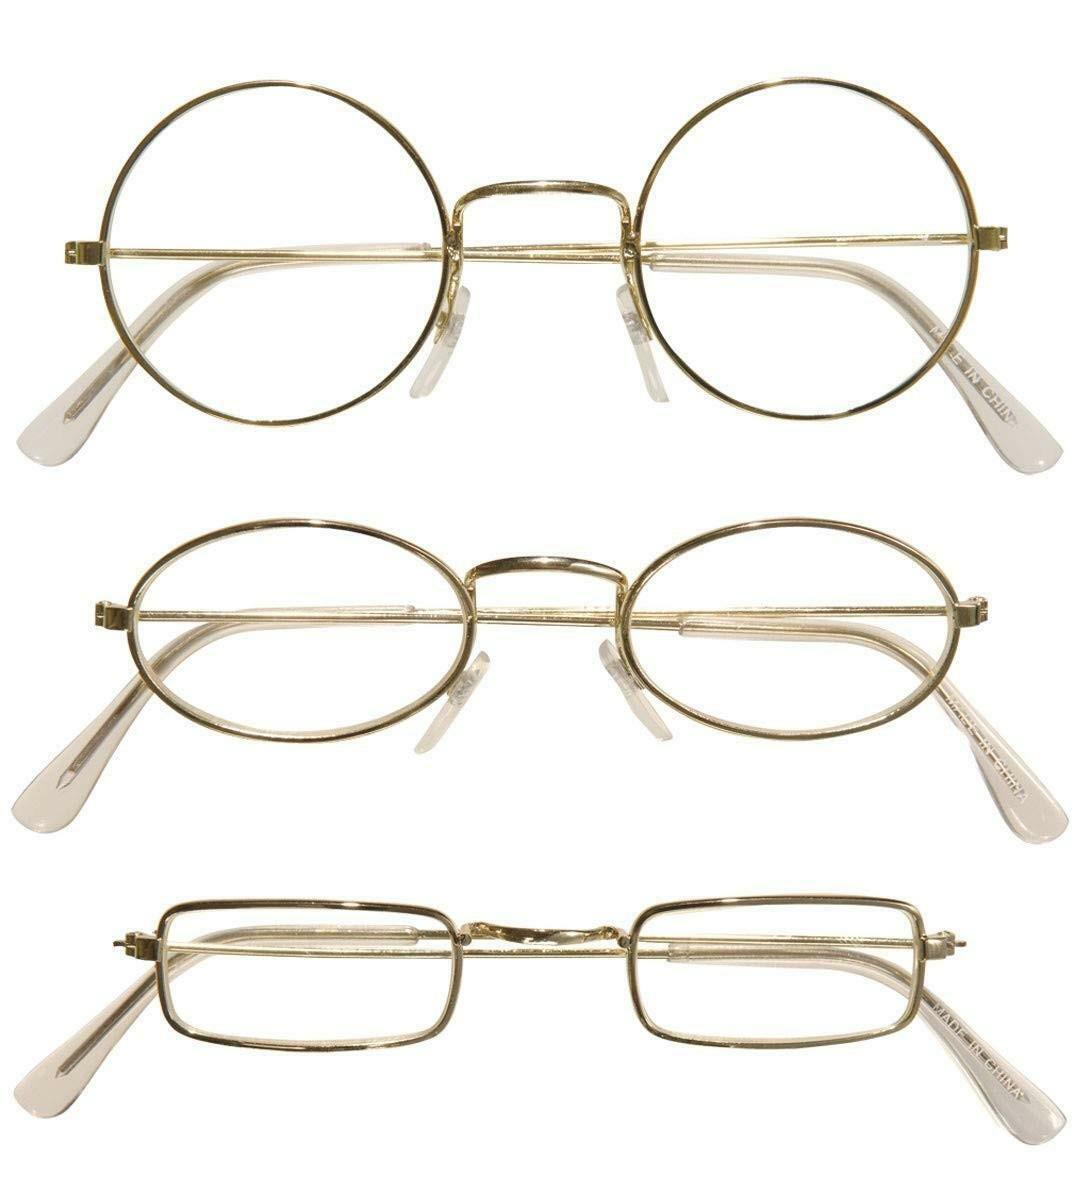 widmann widmann occhiali in metallo con lenti